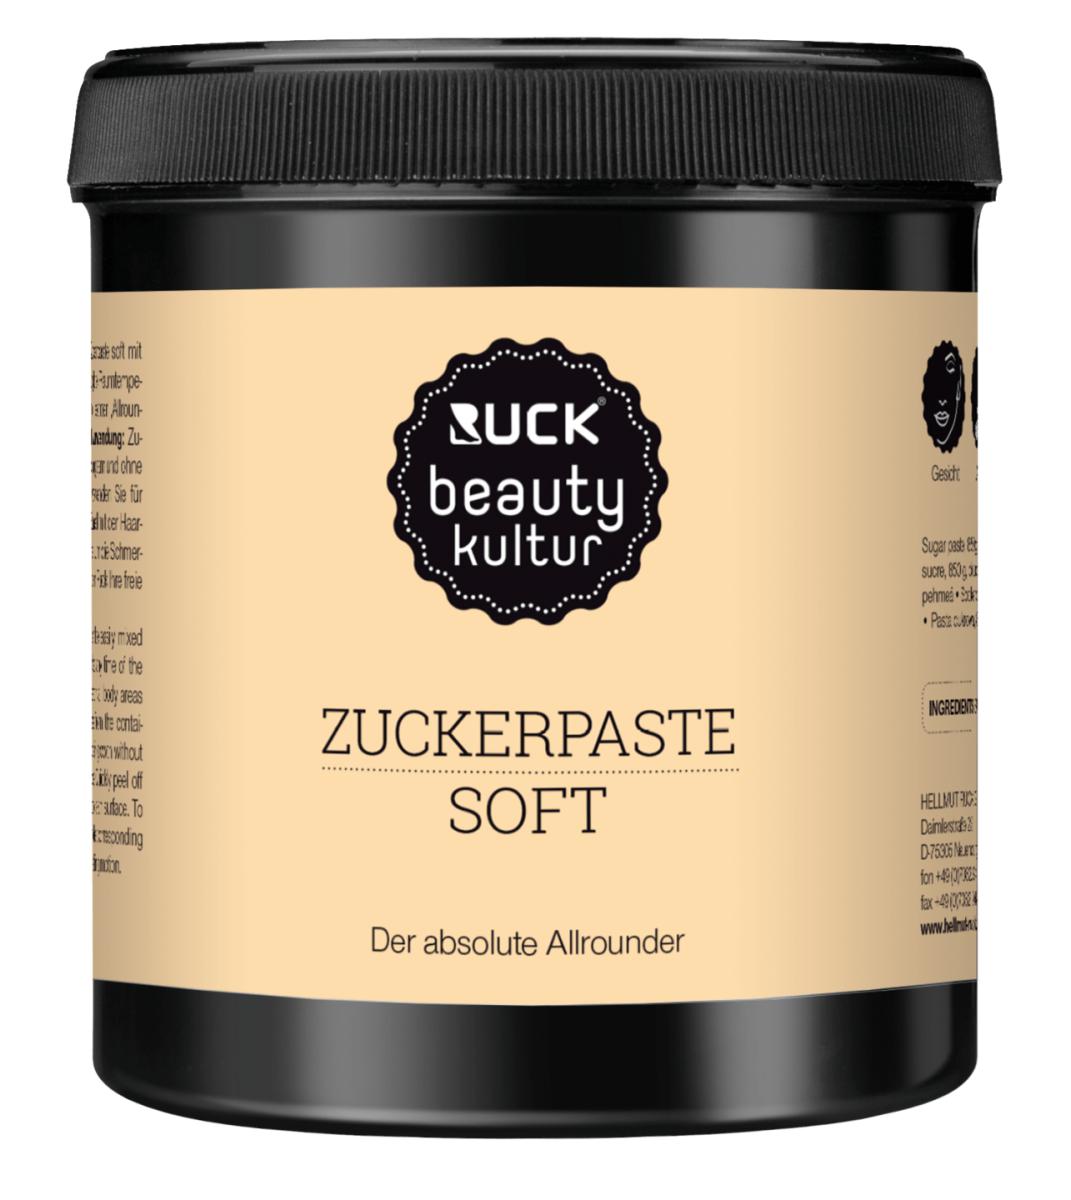 RUCK beautykultur Zuckerpaste soft | 850 g